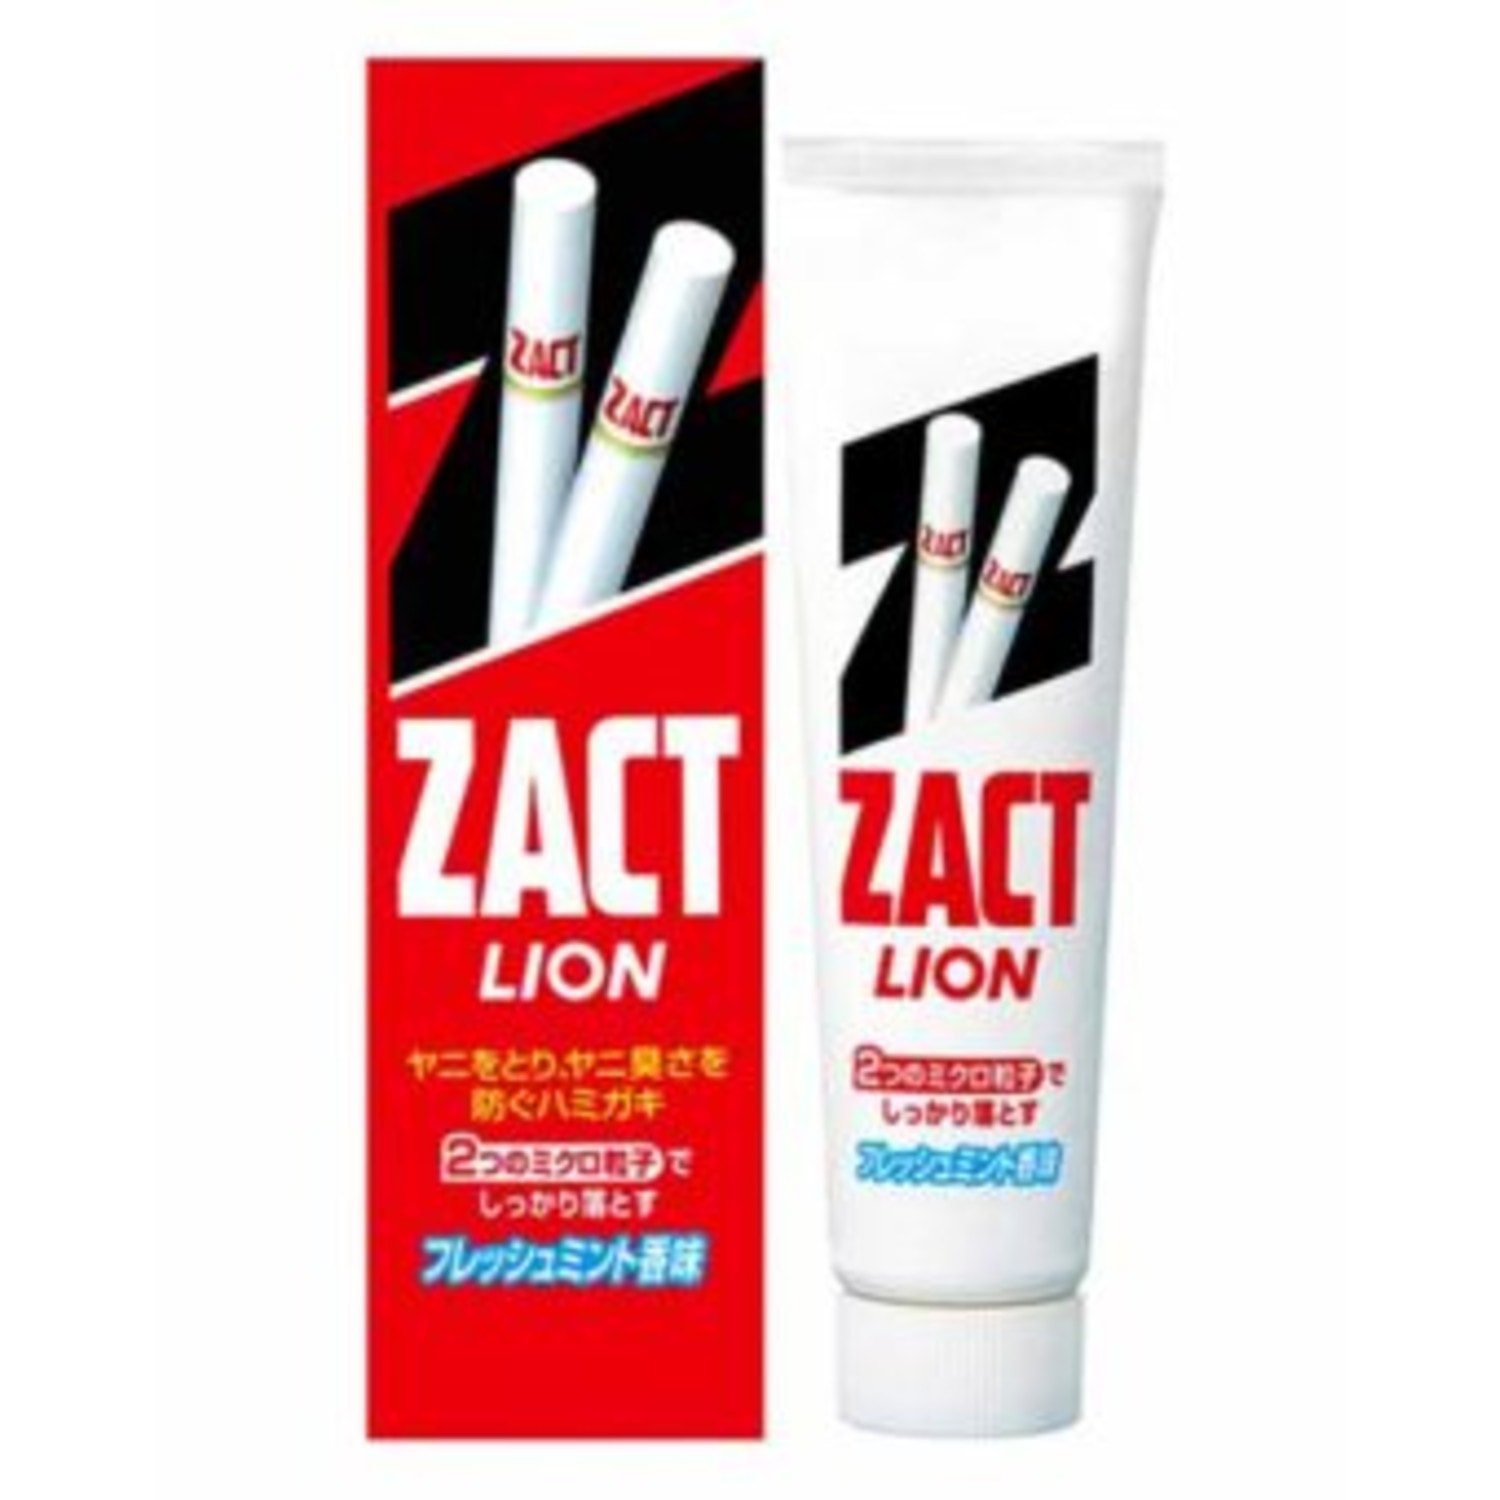 LION ZACT Зубная паста для удаления никотинового налета и устранения запаха табака 150 г. / 171898